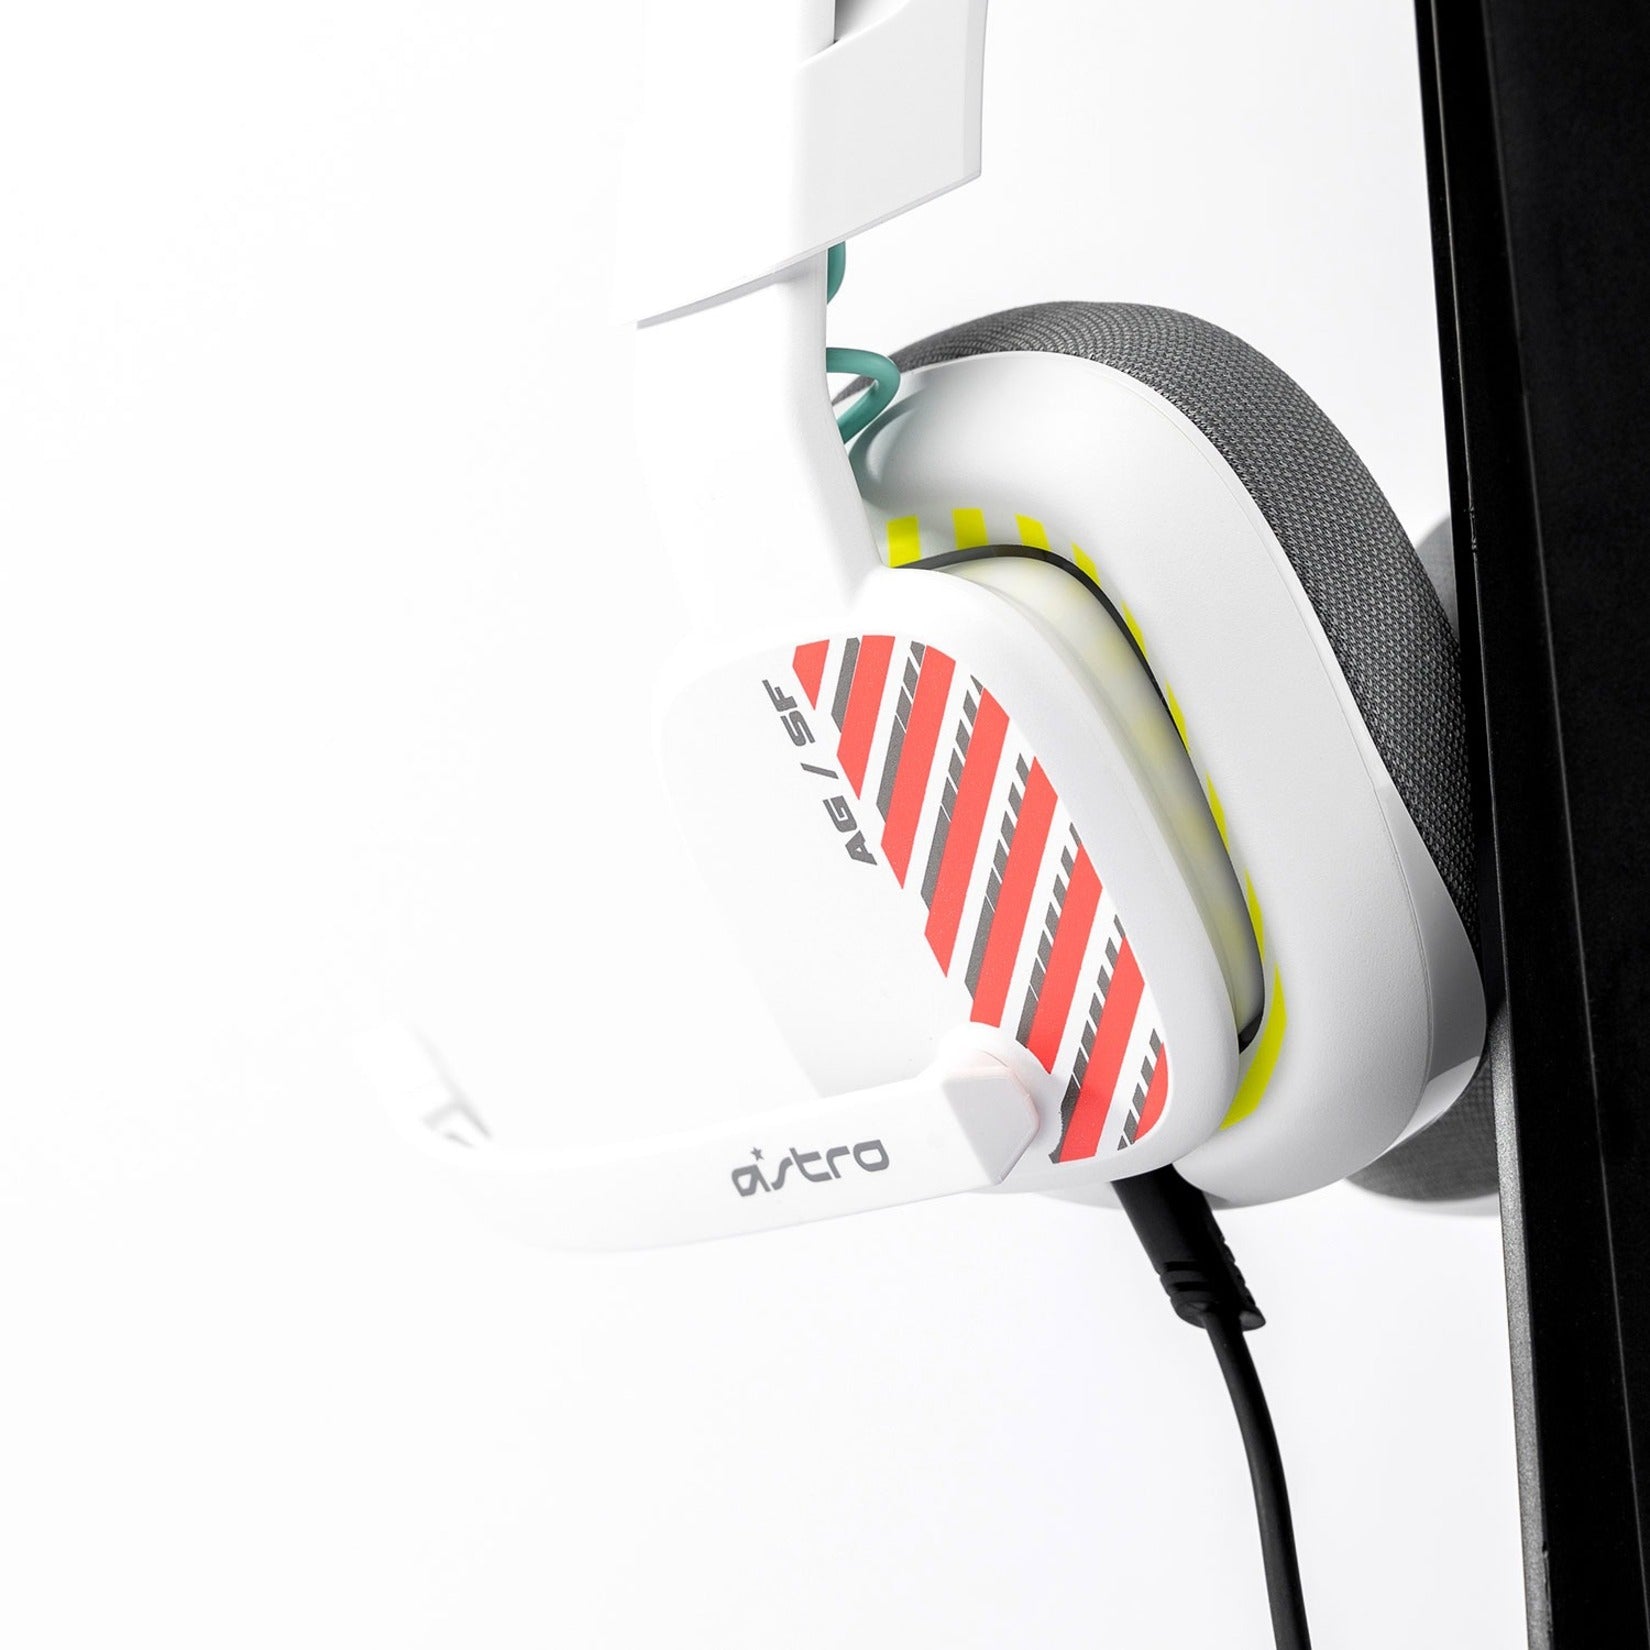 Astro 939-002050 A10 Headset Xbox - Weiß Robust Uni-direktionales Mikrofon Kabelgebundenes Gaming-Headset